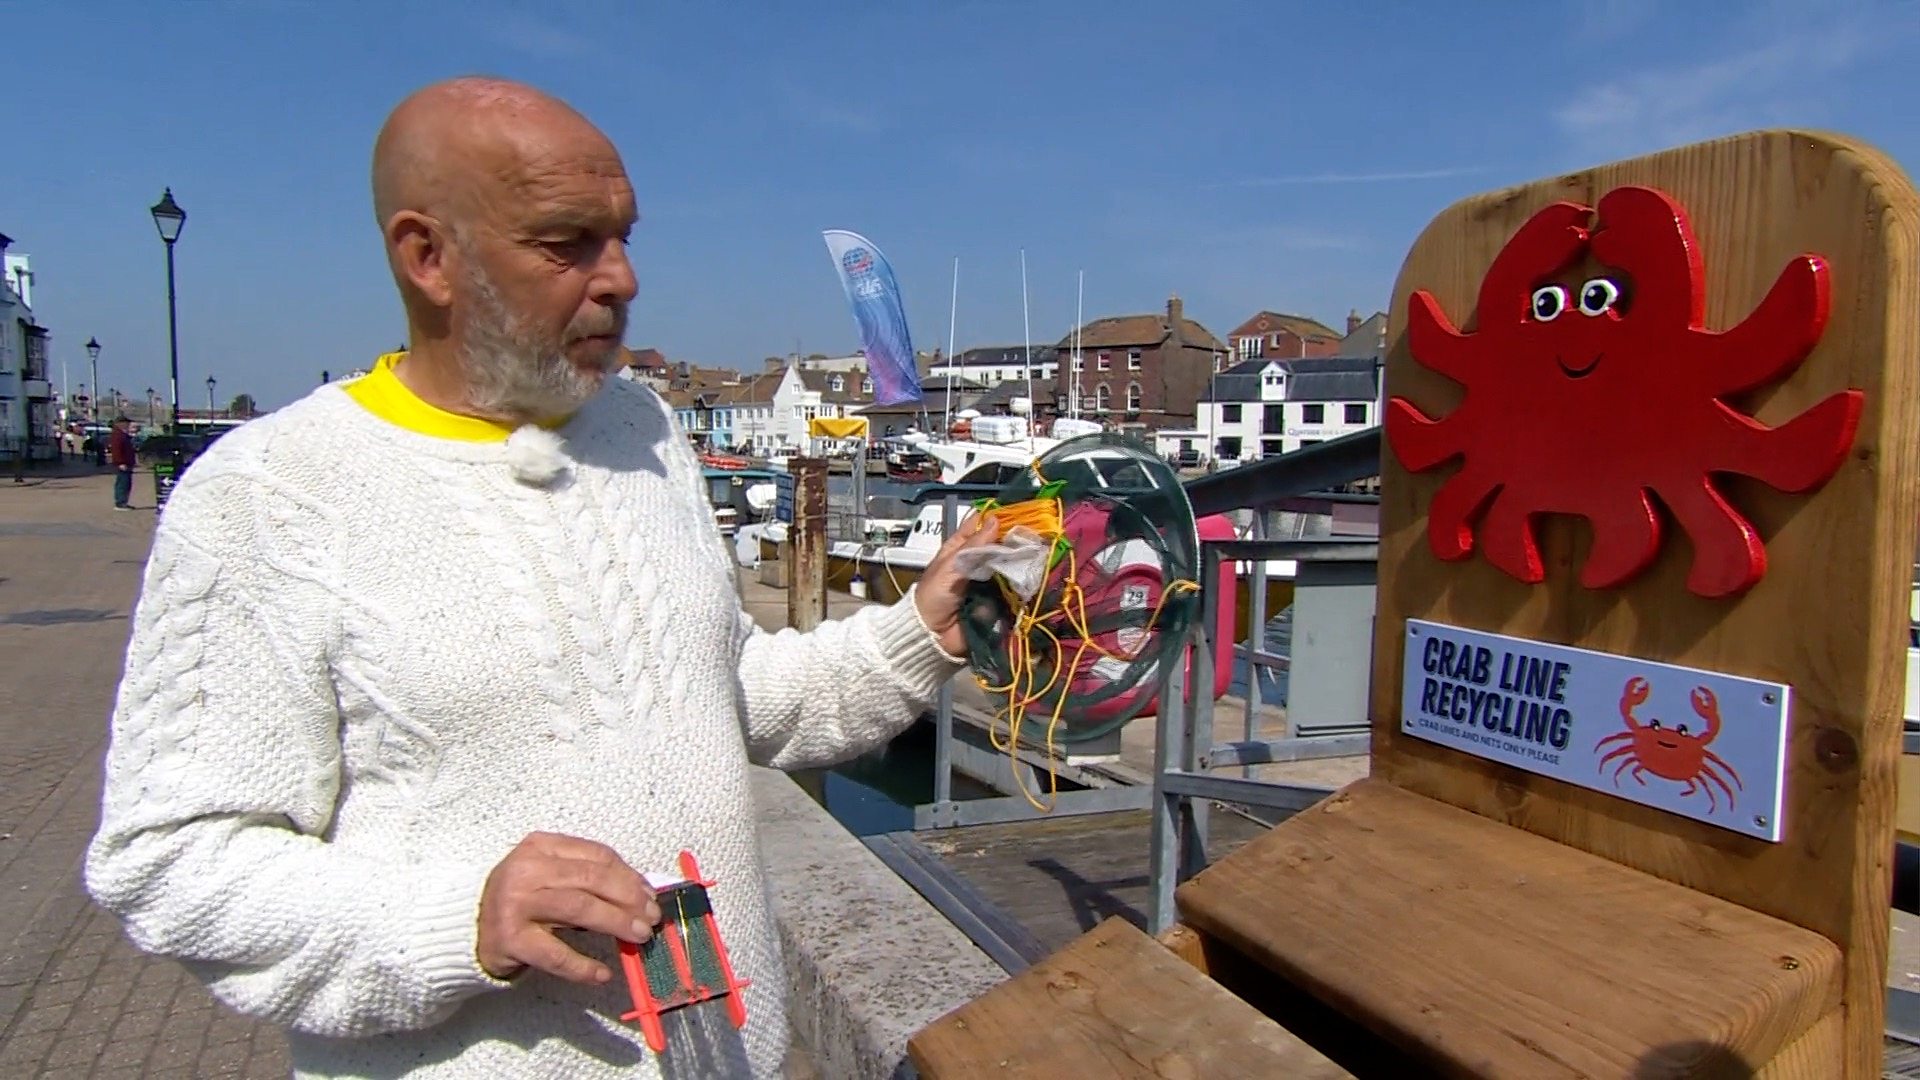 Weymouth recycling bins for crabbing plastics - BBC News